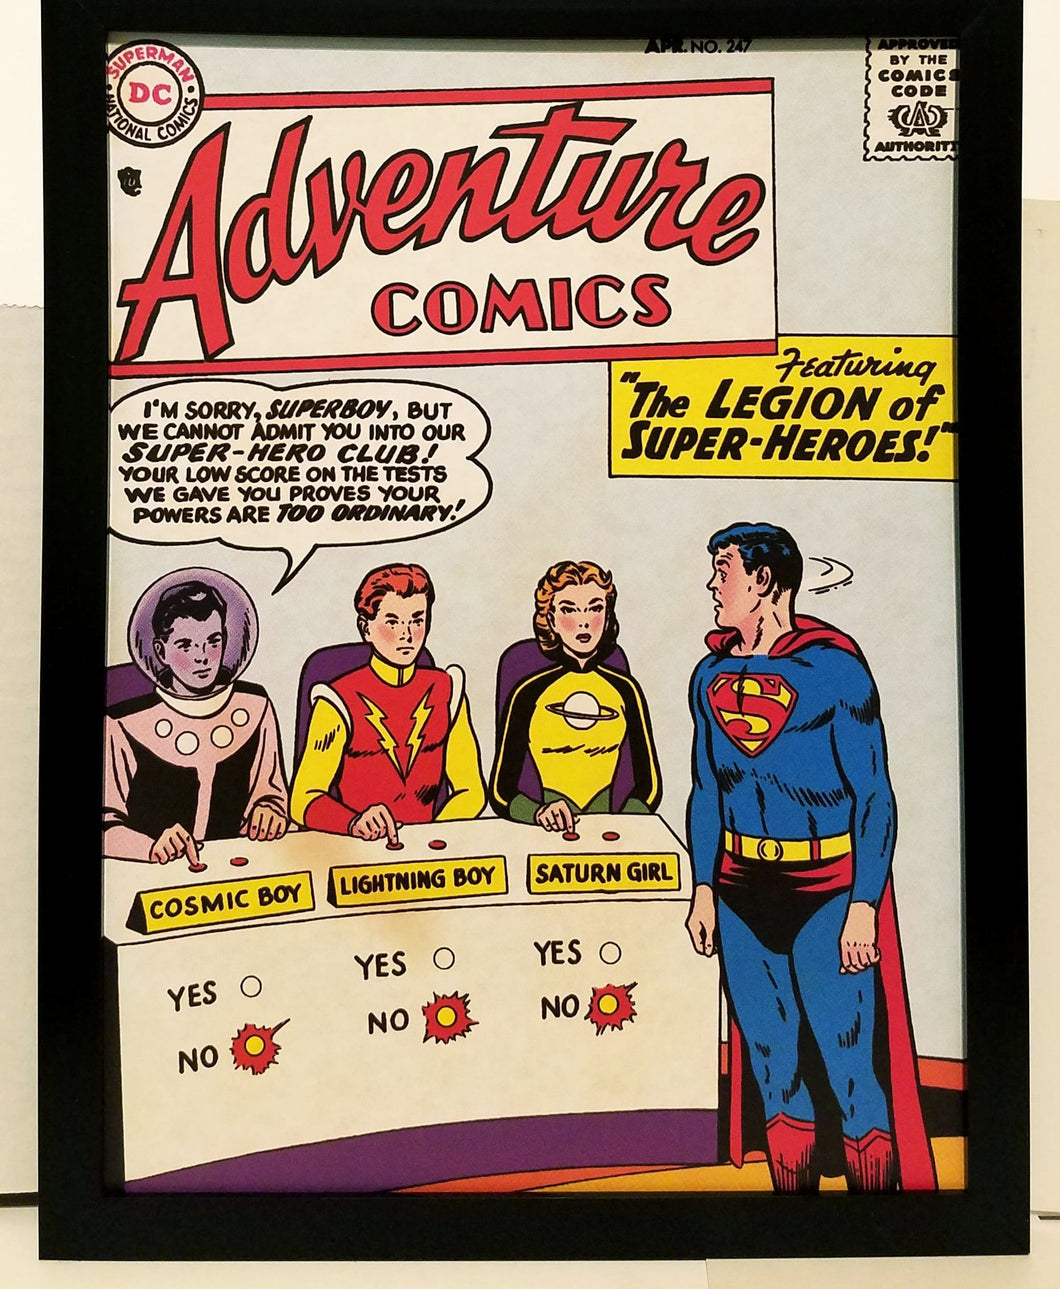 Adventure Comics #247 by Curt Swan 9x12 FRAMED Vintage 1958 DC Art Print Poster